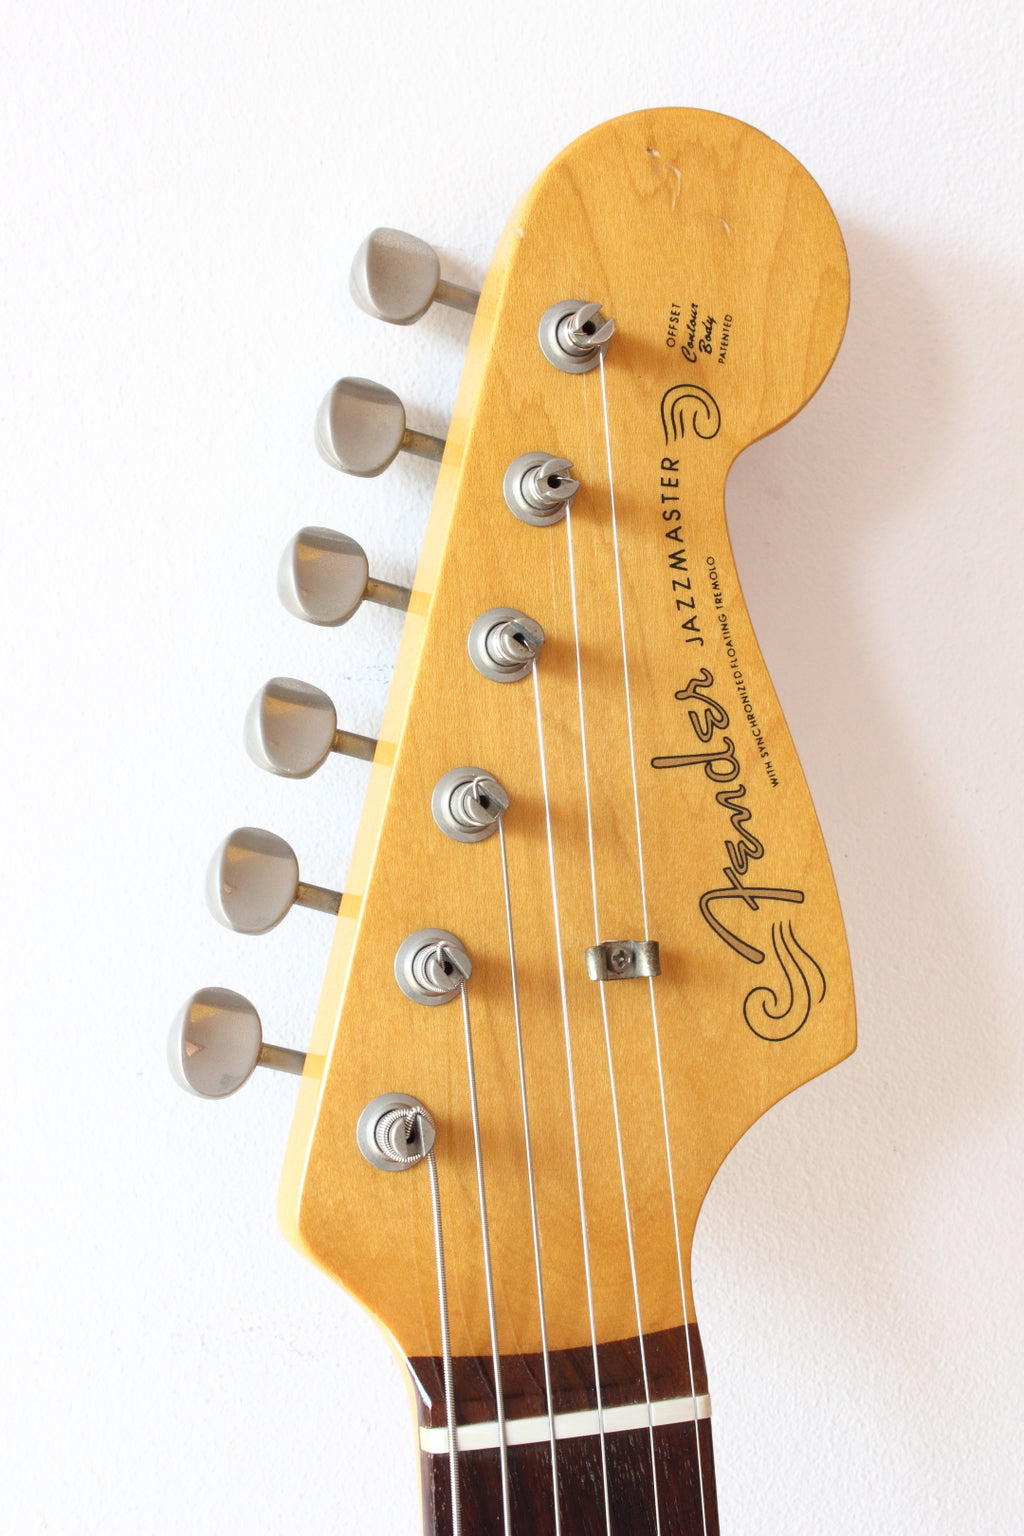 Fender Japan Jazzmaster JM66-80 Sunburst 1997-00